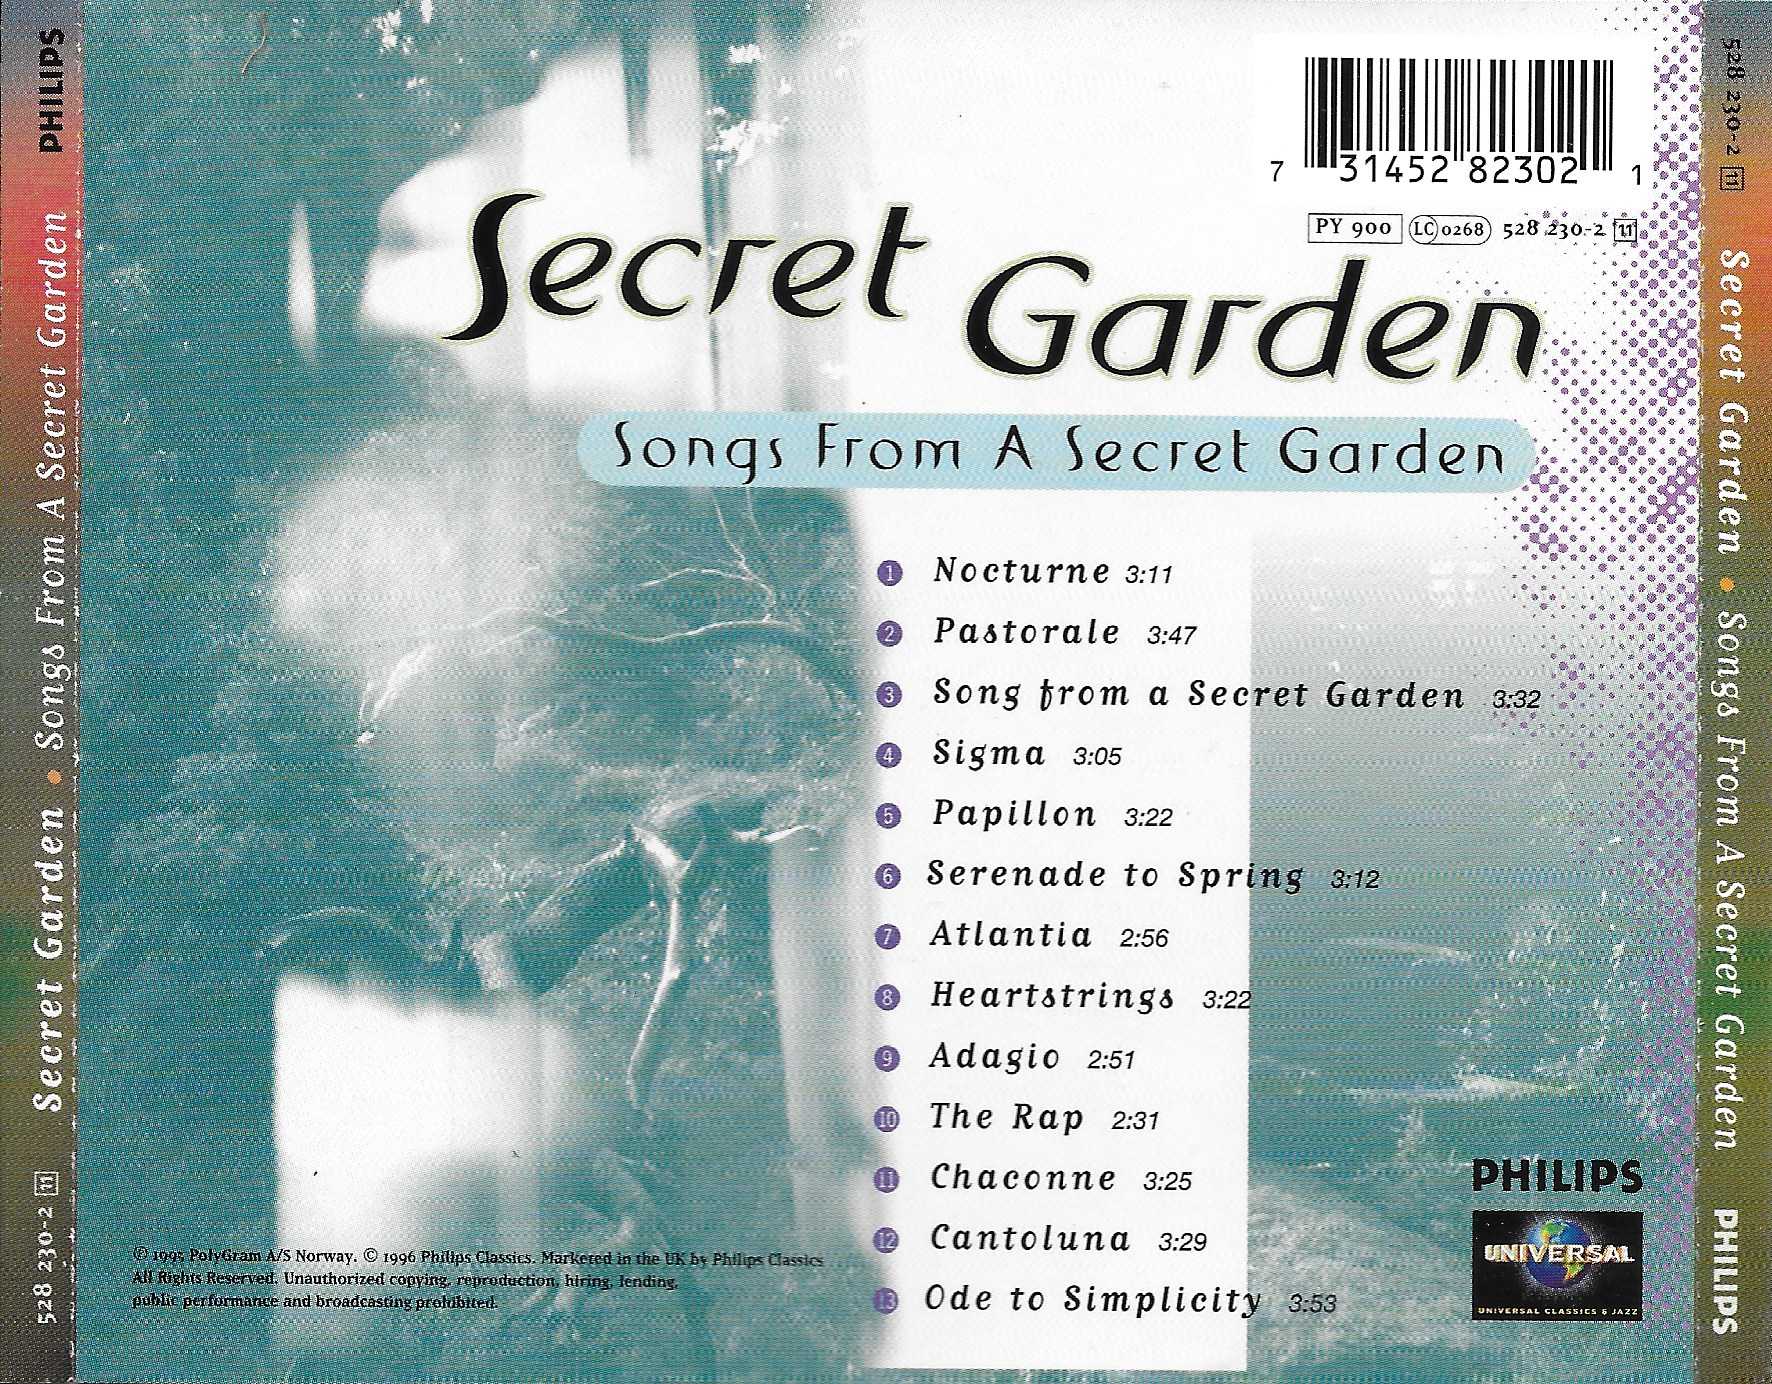 Picture of 528230 - 2 11 Songs from a secret garden by artist Secret Garden 